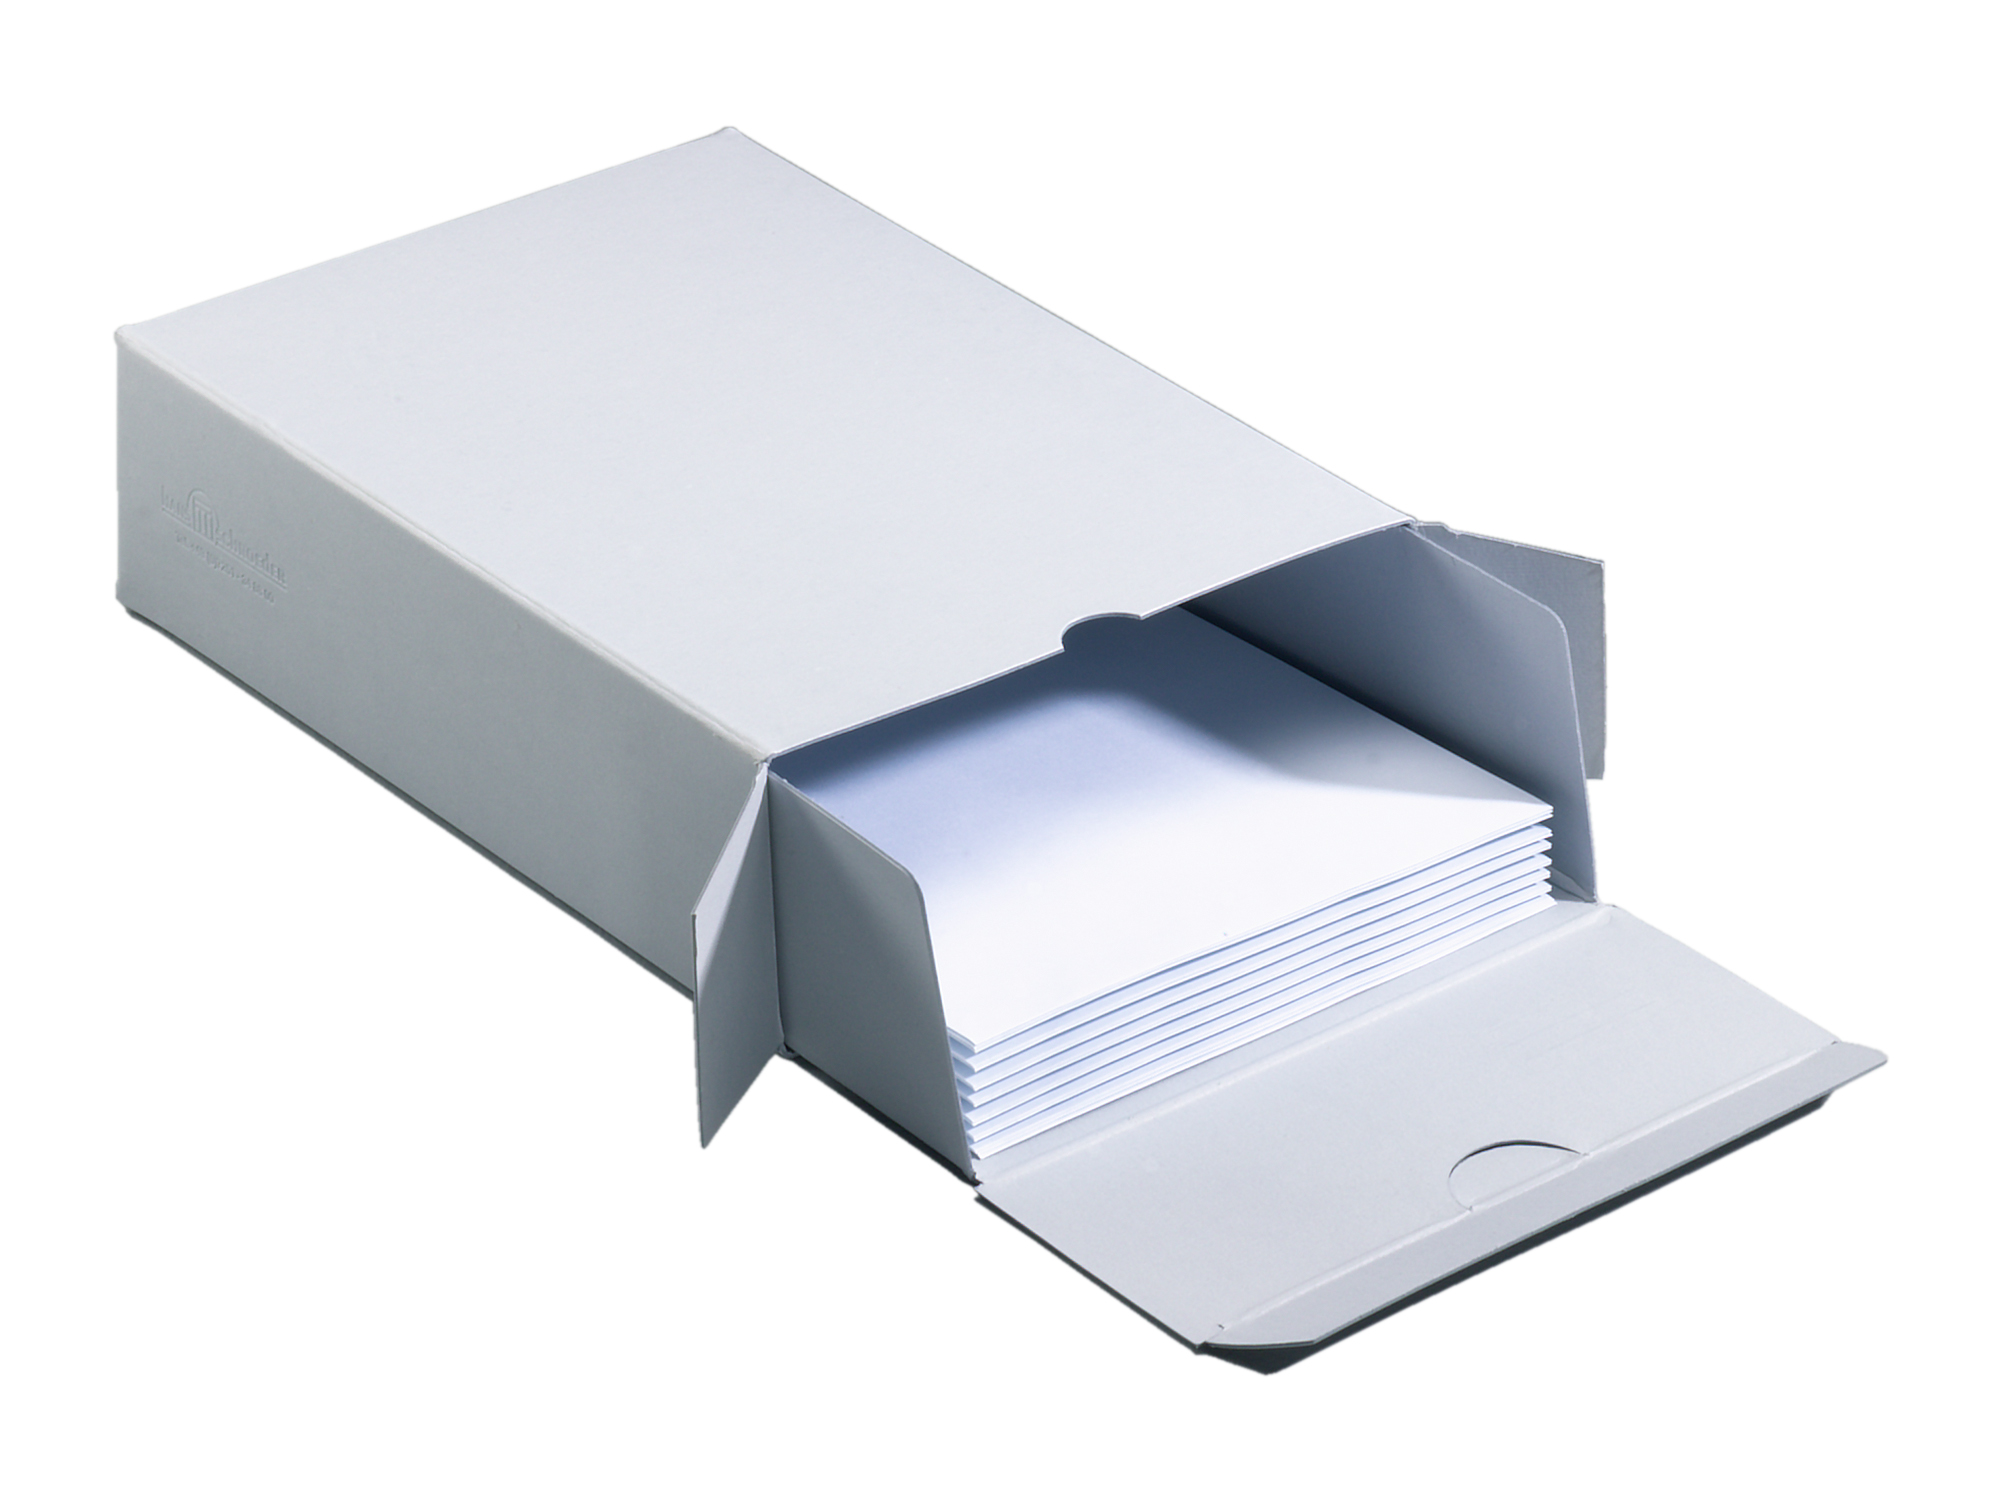 Storage box „Thalia“ - DIN A3 Premium with drawer